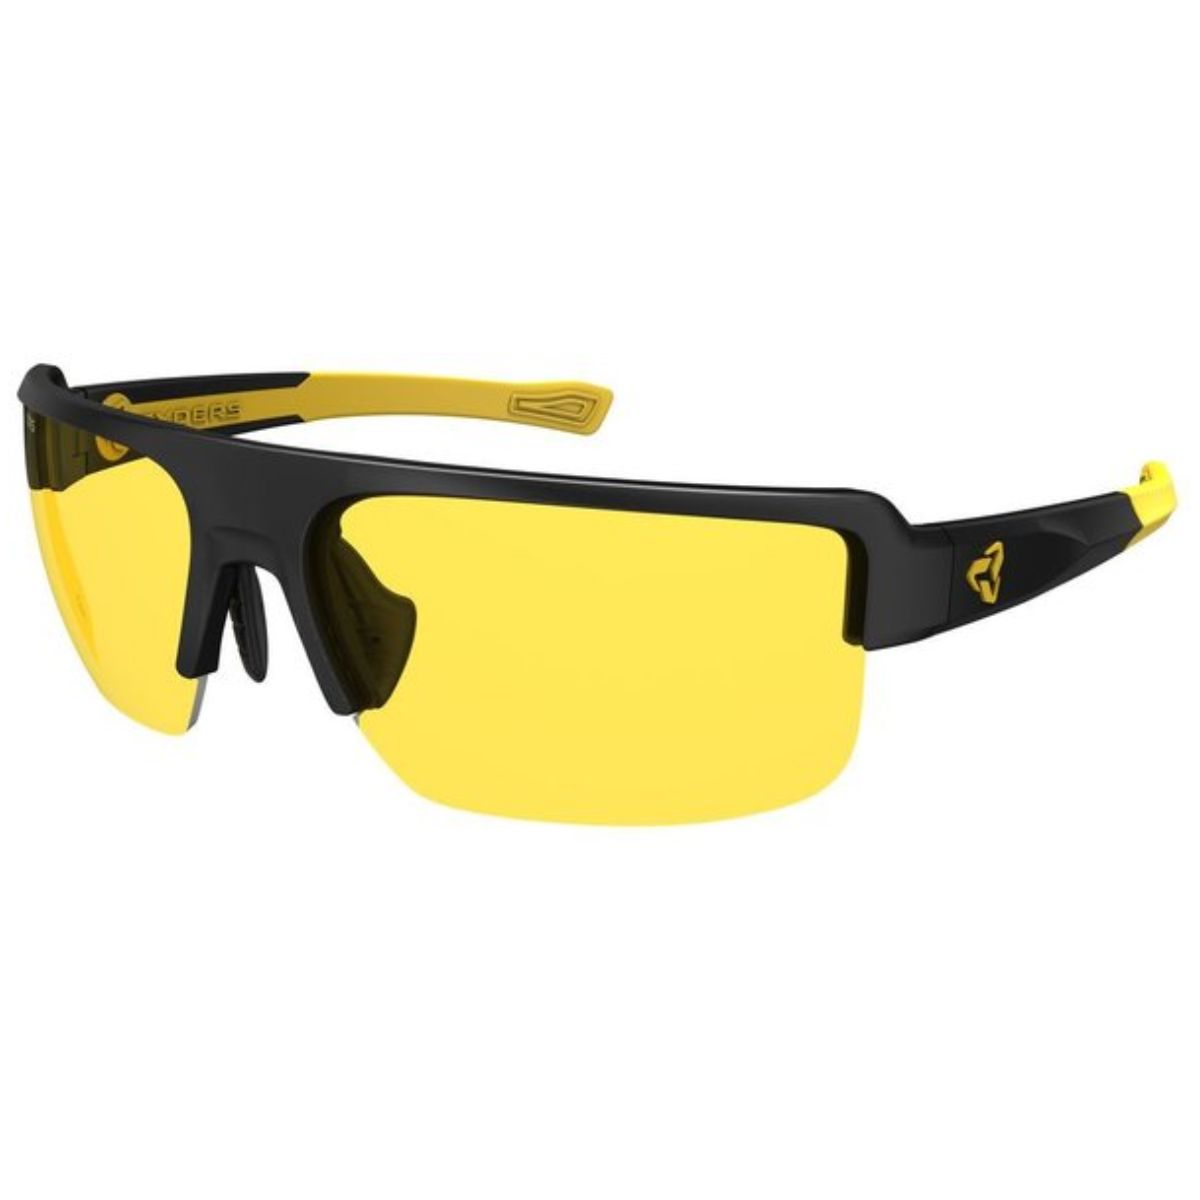 Ryders Seventh Sunglasses Black - Yellow Lens